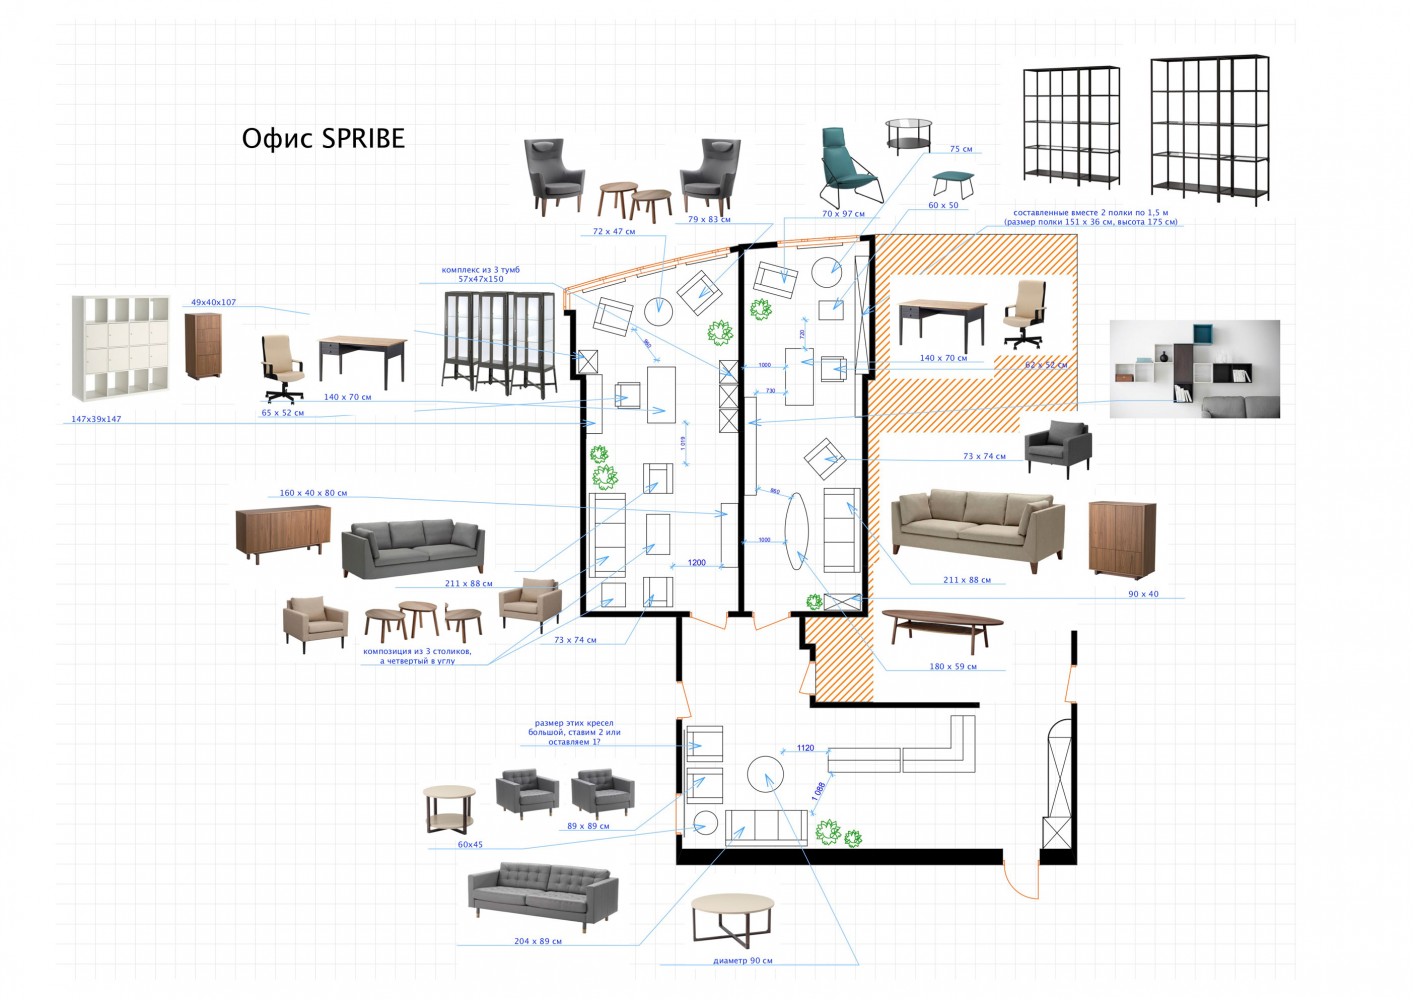 Комплектация офиса, план в дизайн-проект и комплектация офиса мебелью ИКЕА — дизайнер  Сазонова Ира